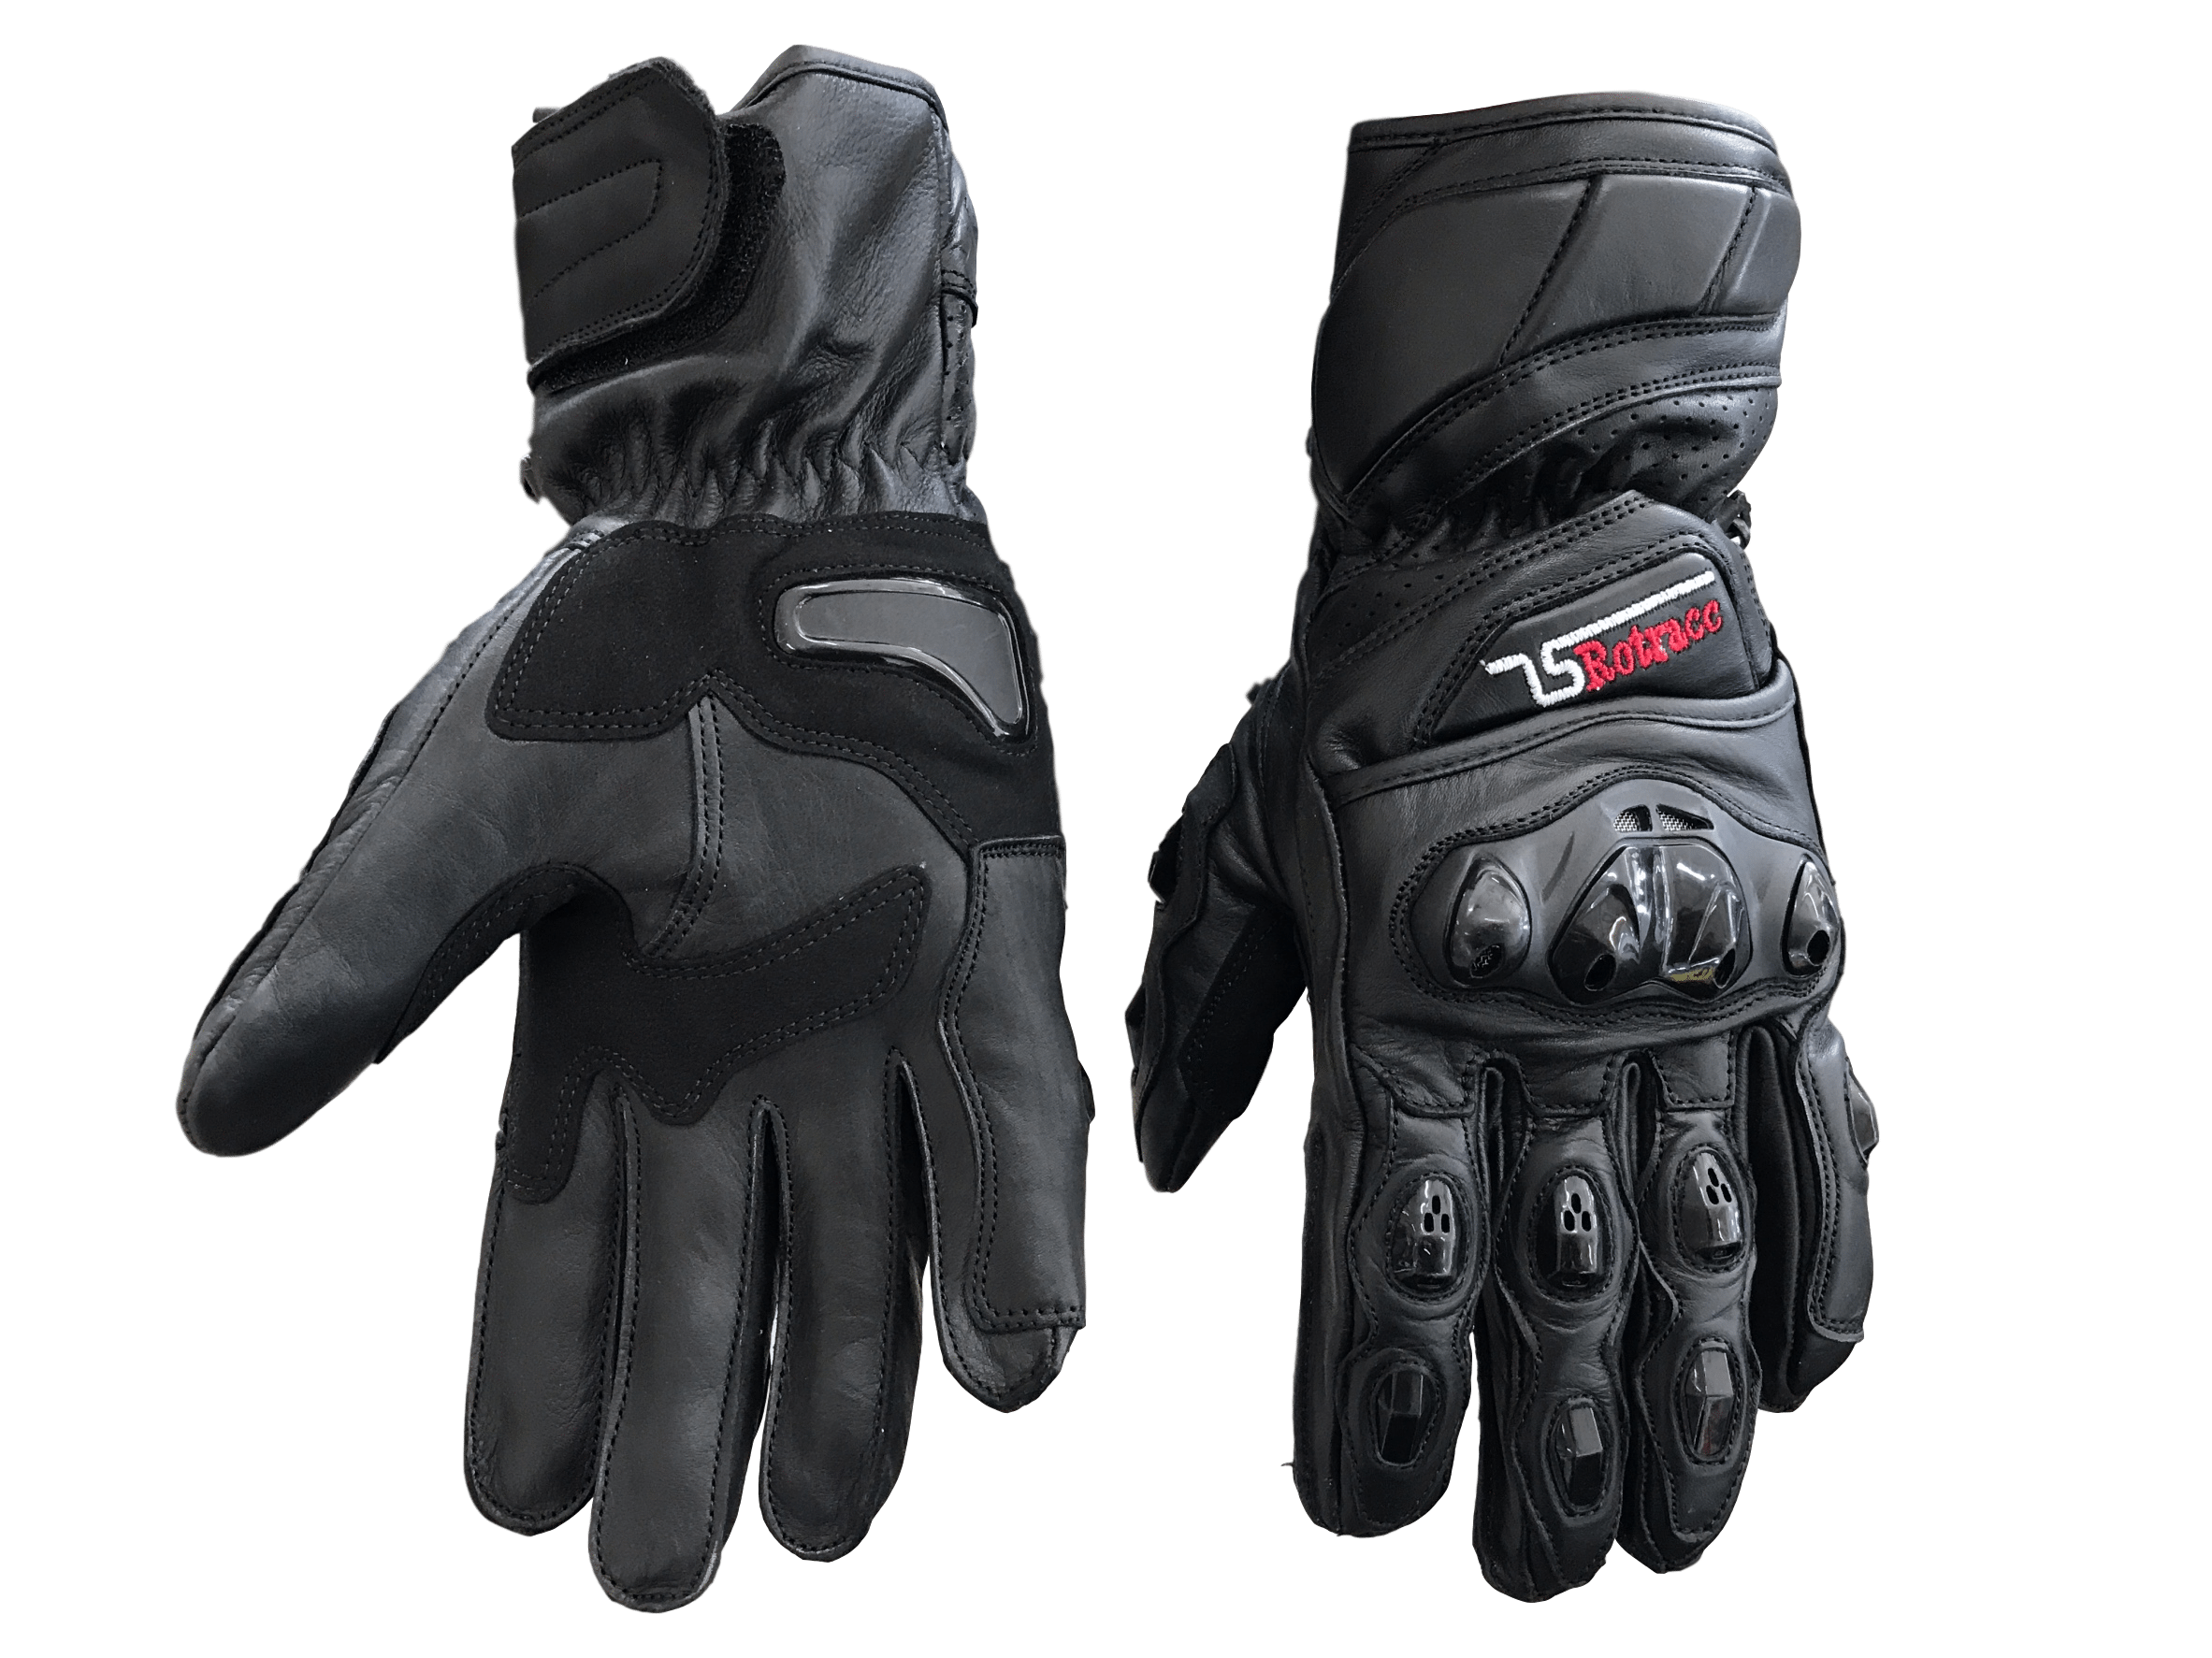 MC Auto: Rotracc Leather Superbike Gloves